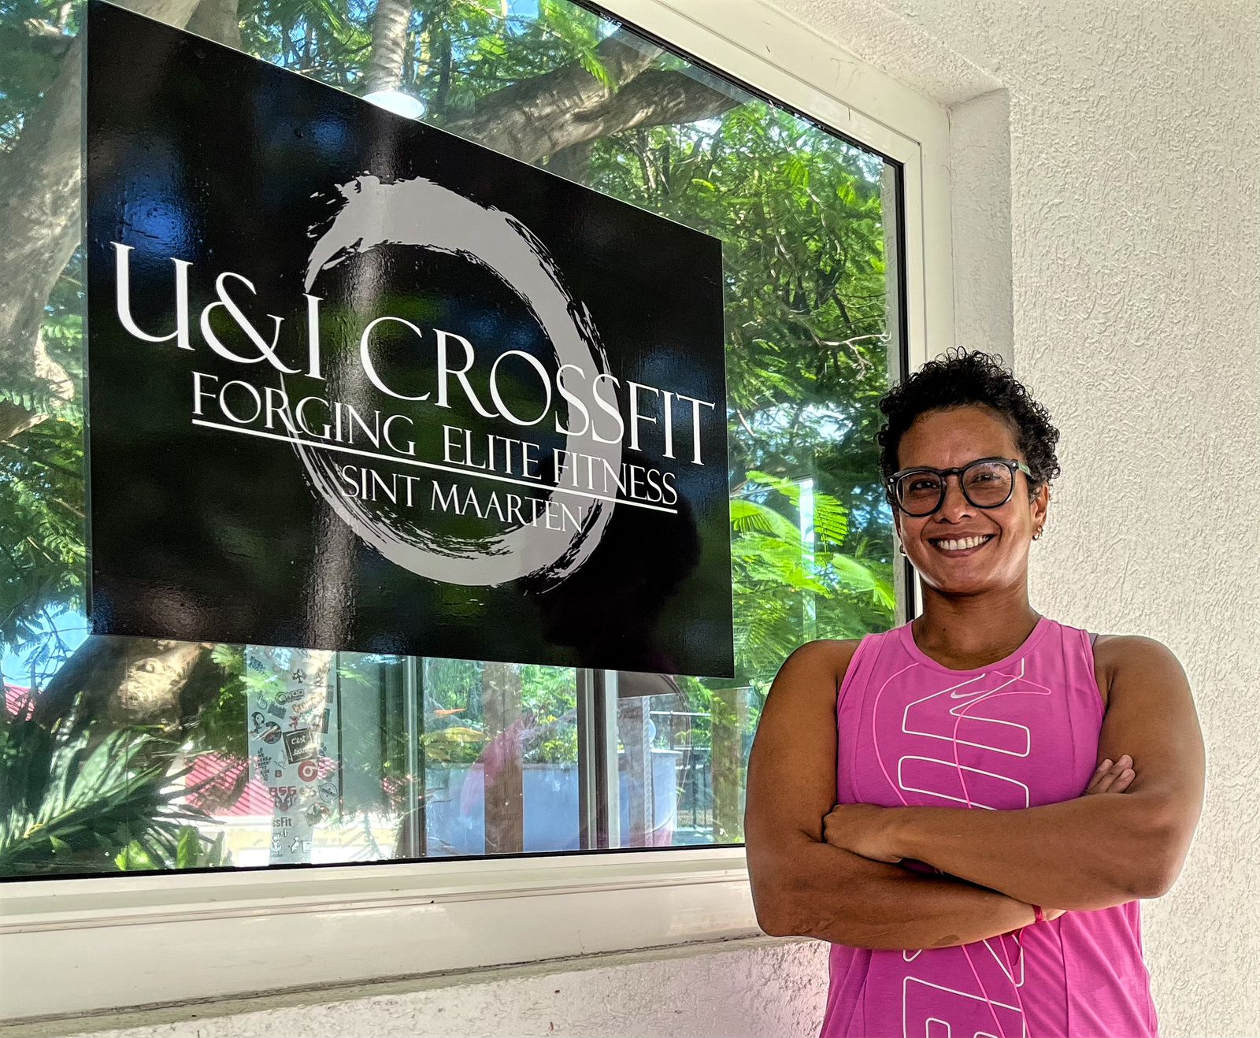 Dayana Mota is the island's CrossFit coach